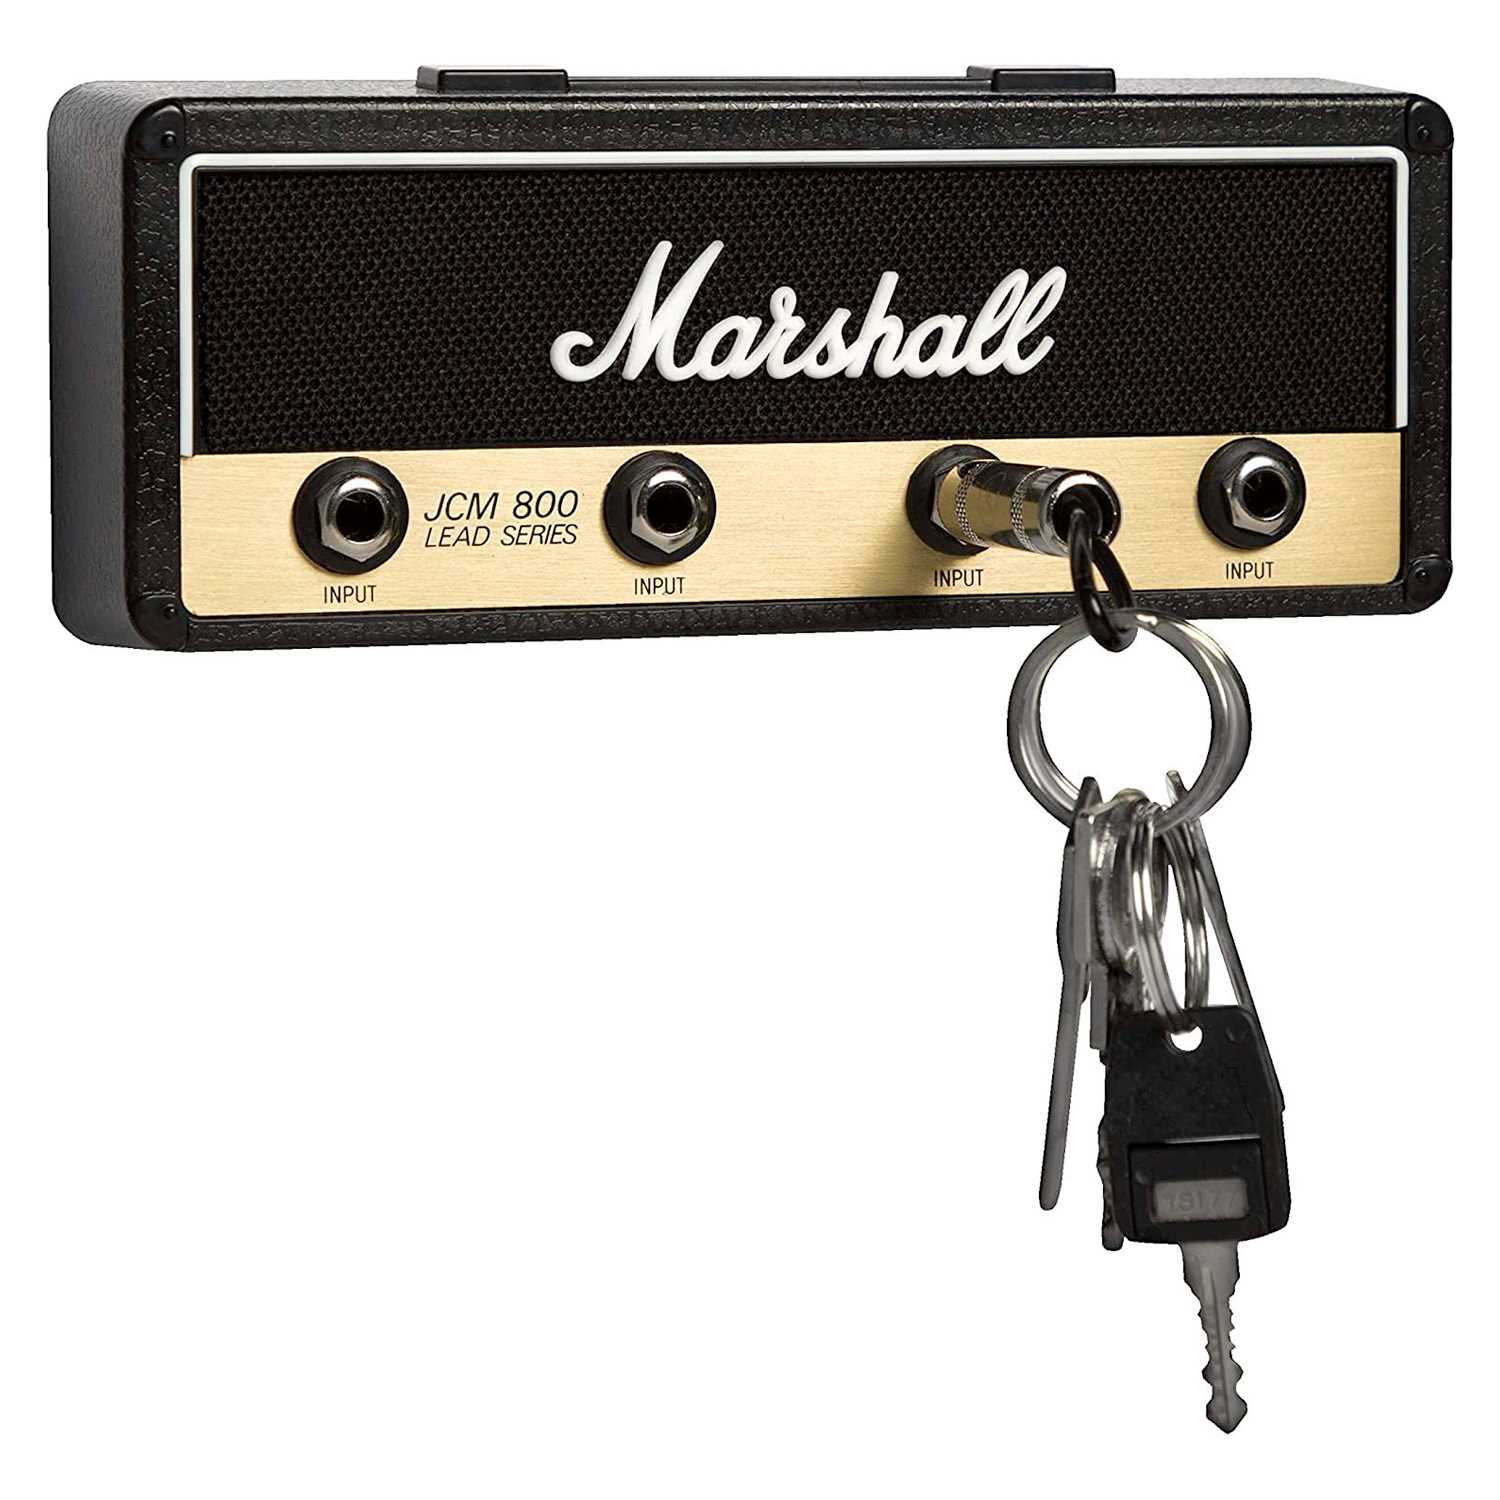 Marshall Jack Rack Guitar Amp Key Hanger Main Image - Badass Birthday Gifts For Guys